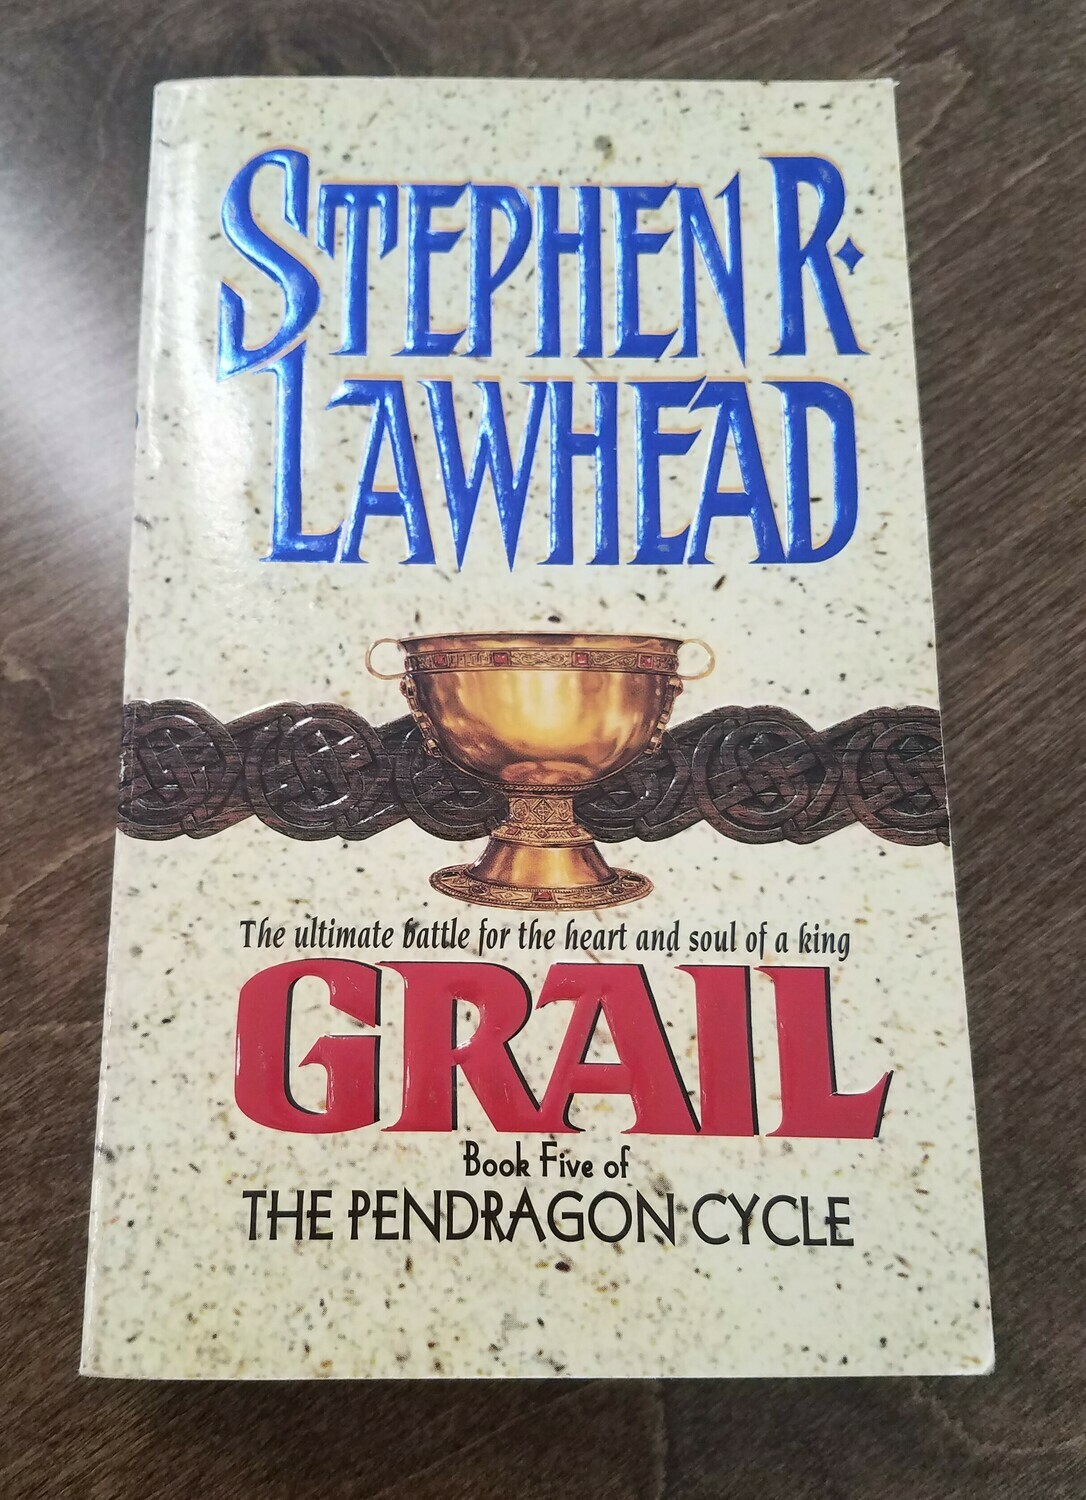 Grail by Stephen R. Lawhead